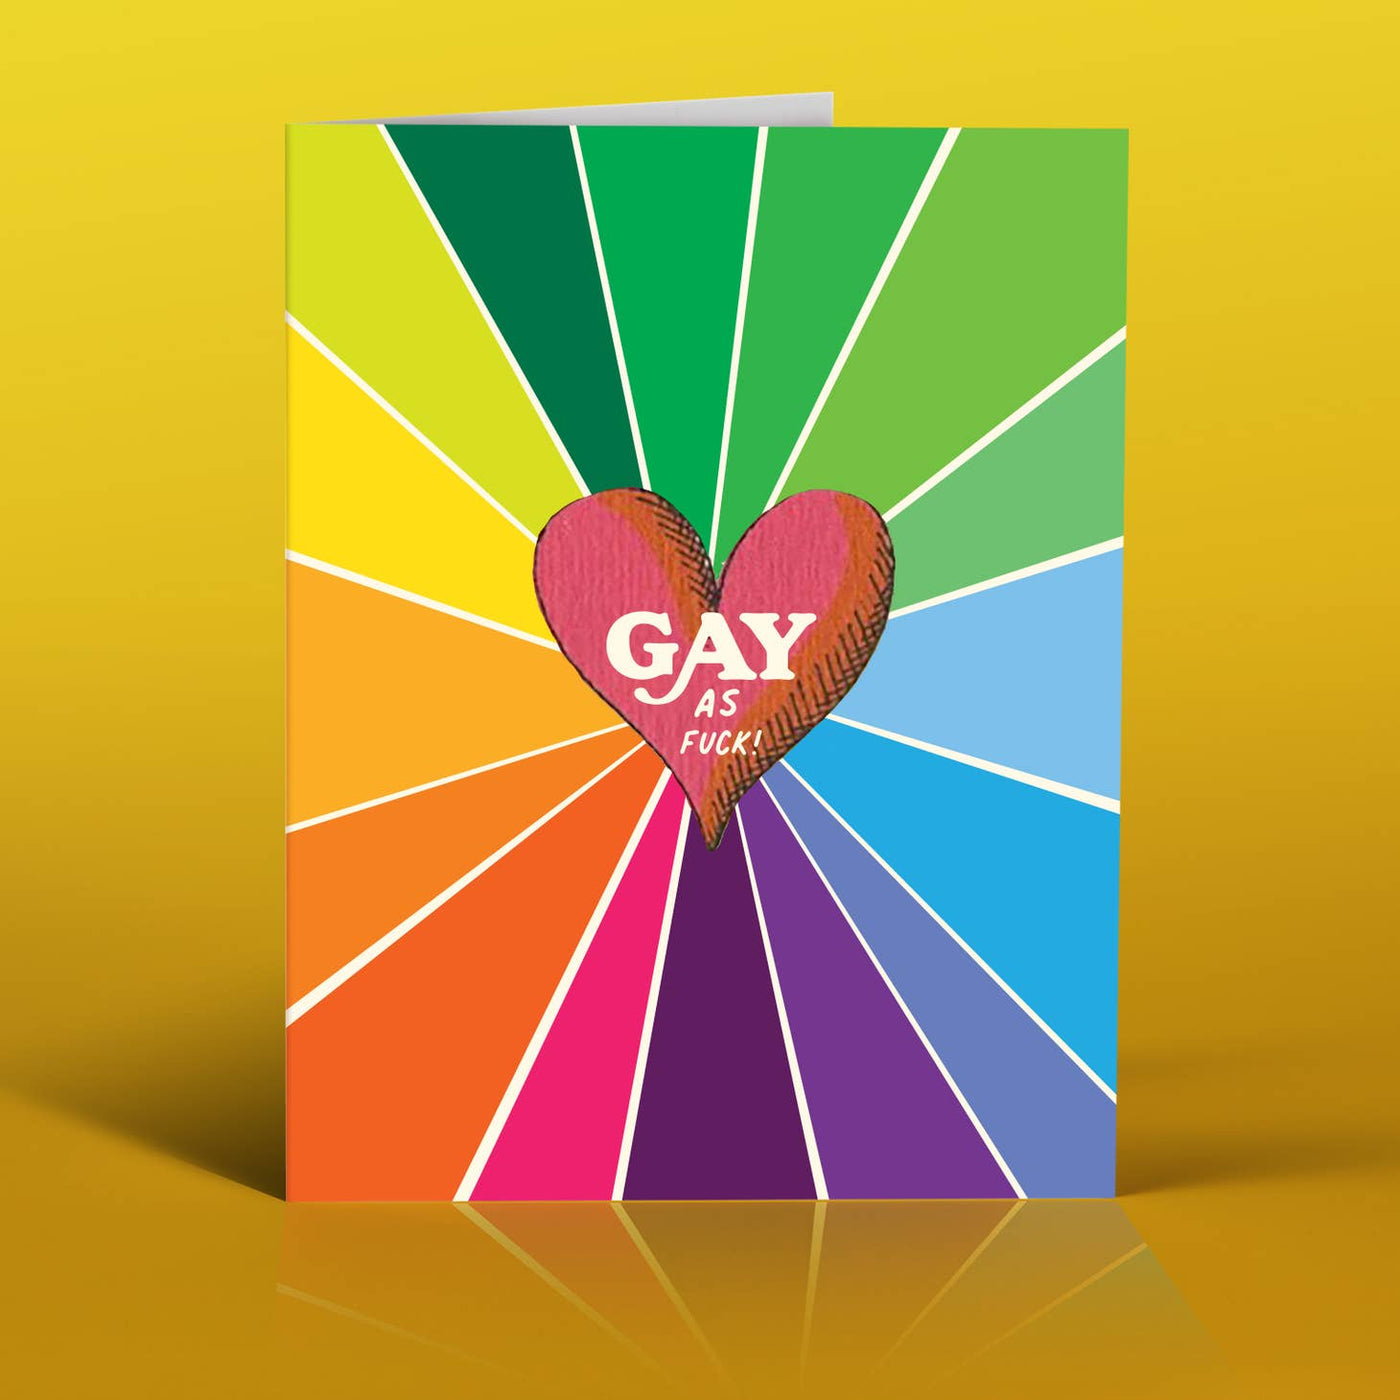 Gay AF Greeting Card